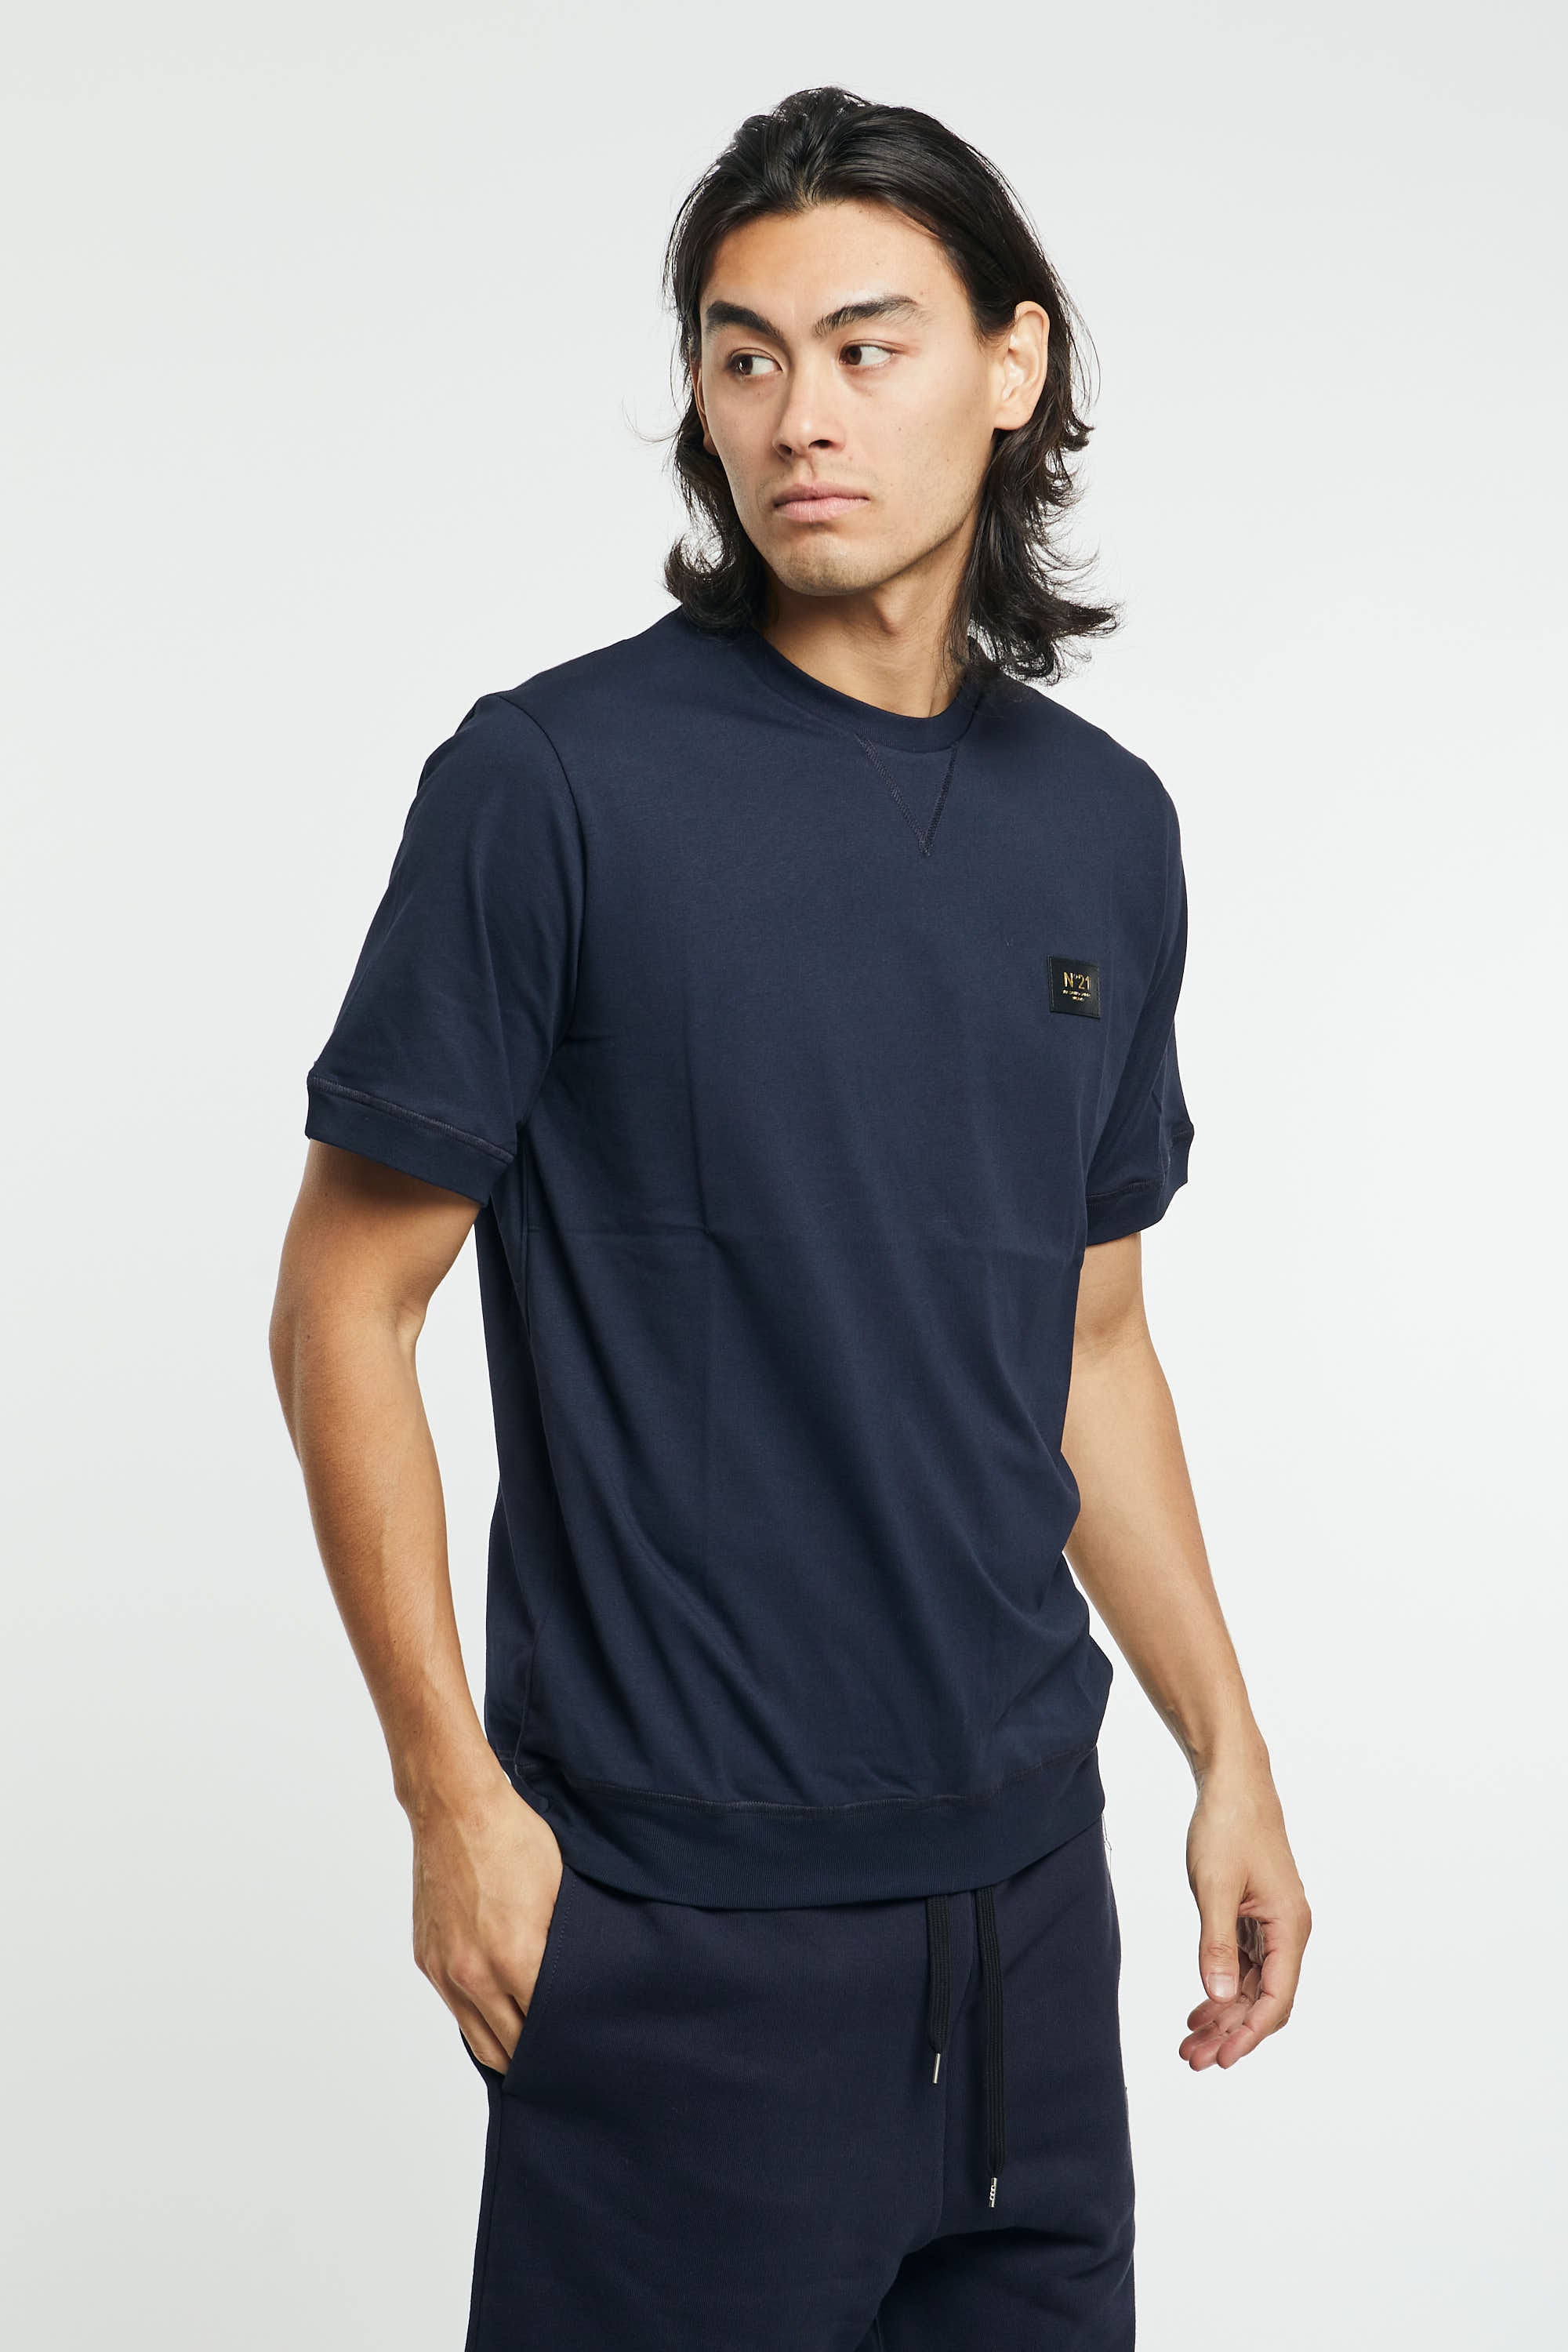 N°21 Cotton/Eco-leather Blue T-Shirt - 7